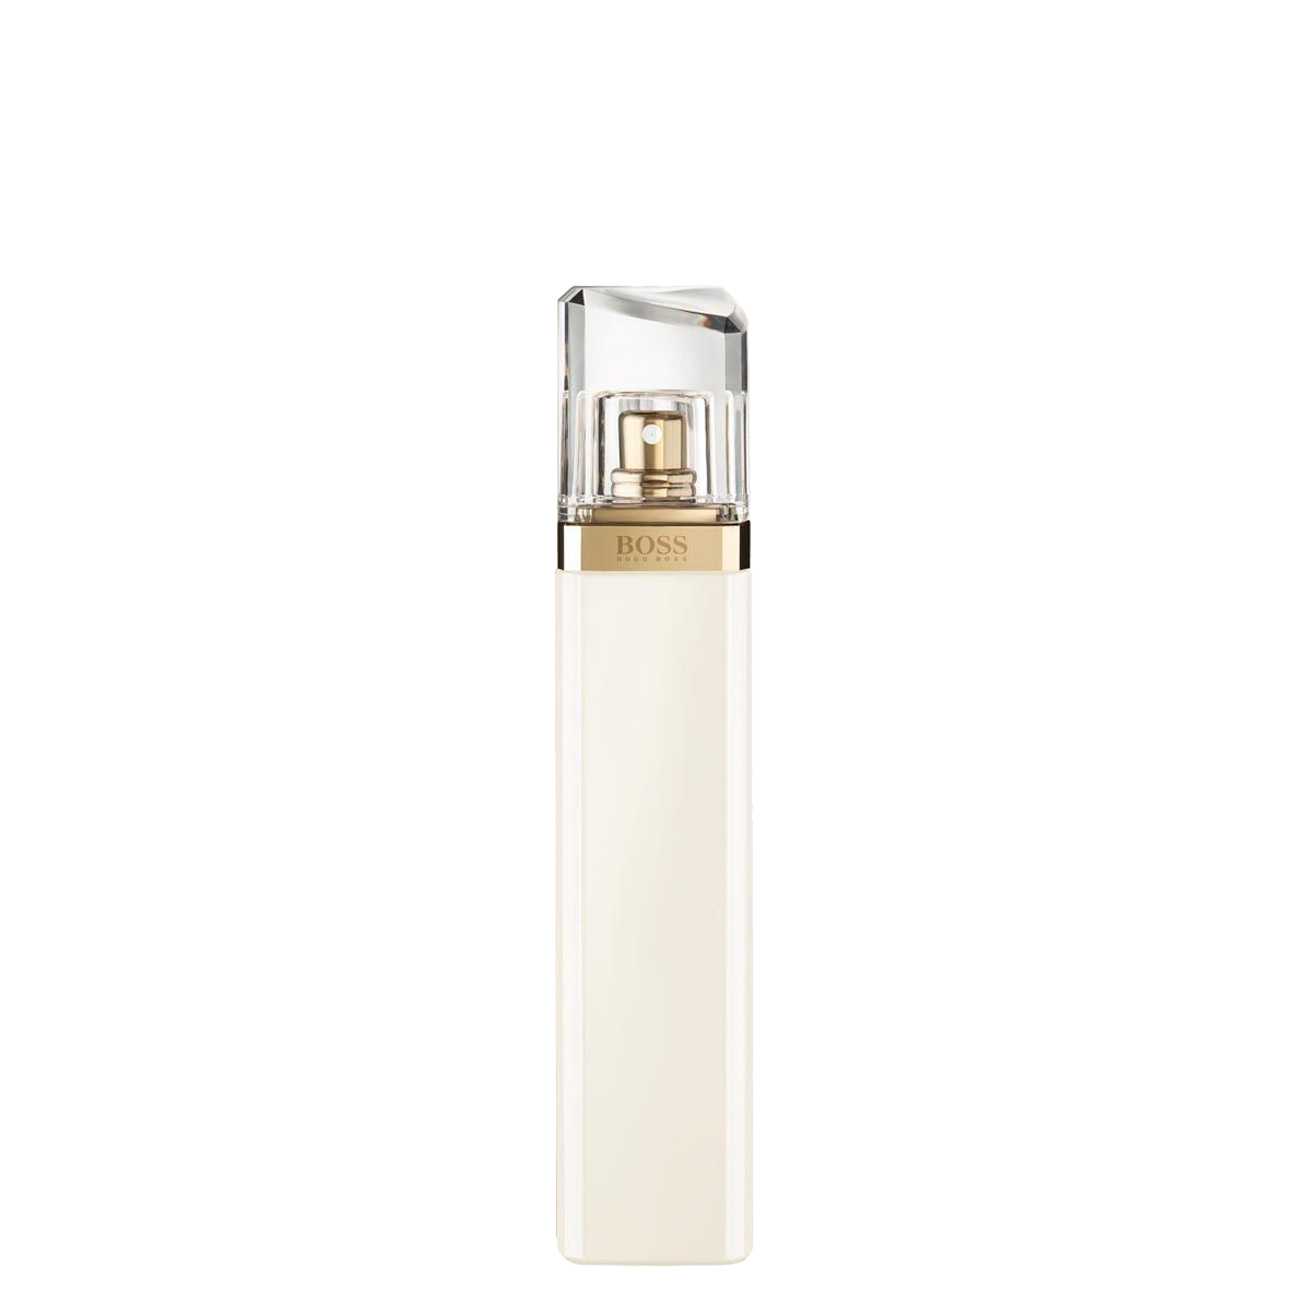 Apa de Parfum Hugo Boss BOSS JOUR 75 ML 75ml cu comanda online